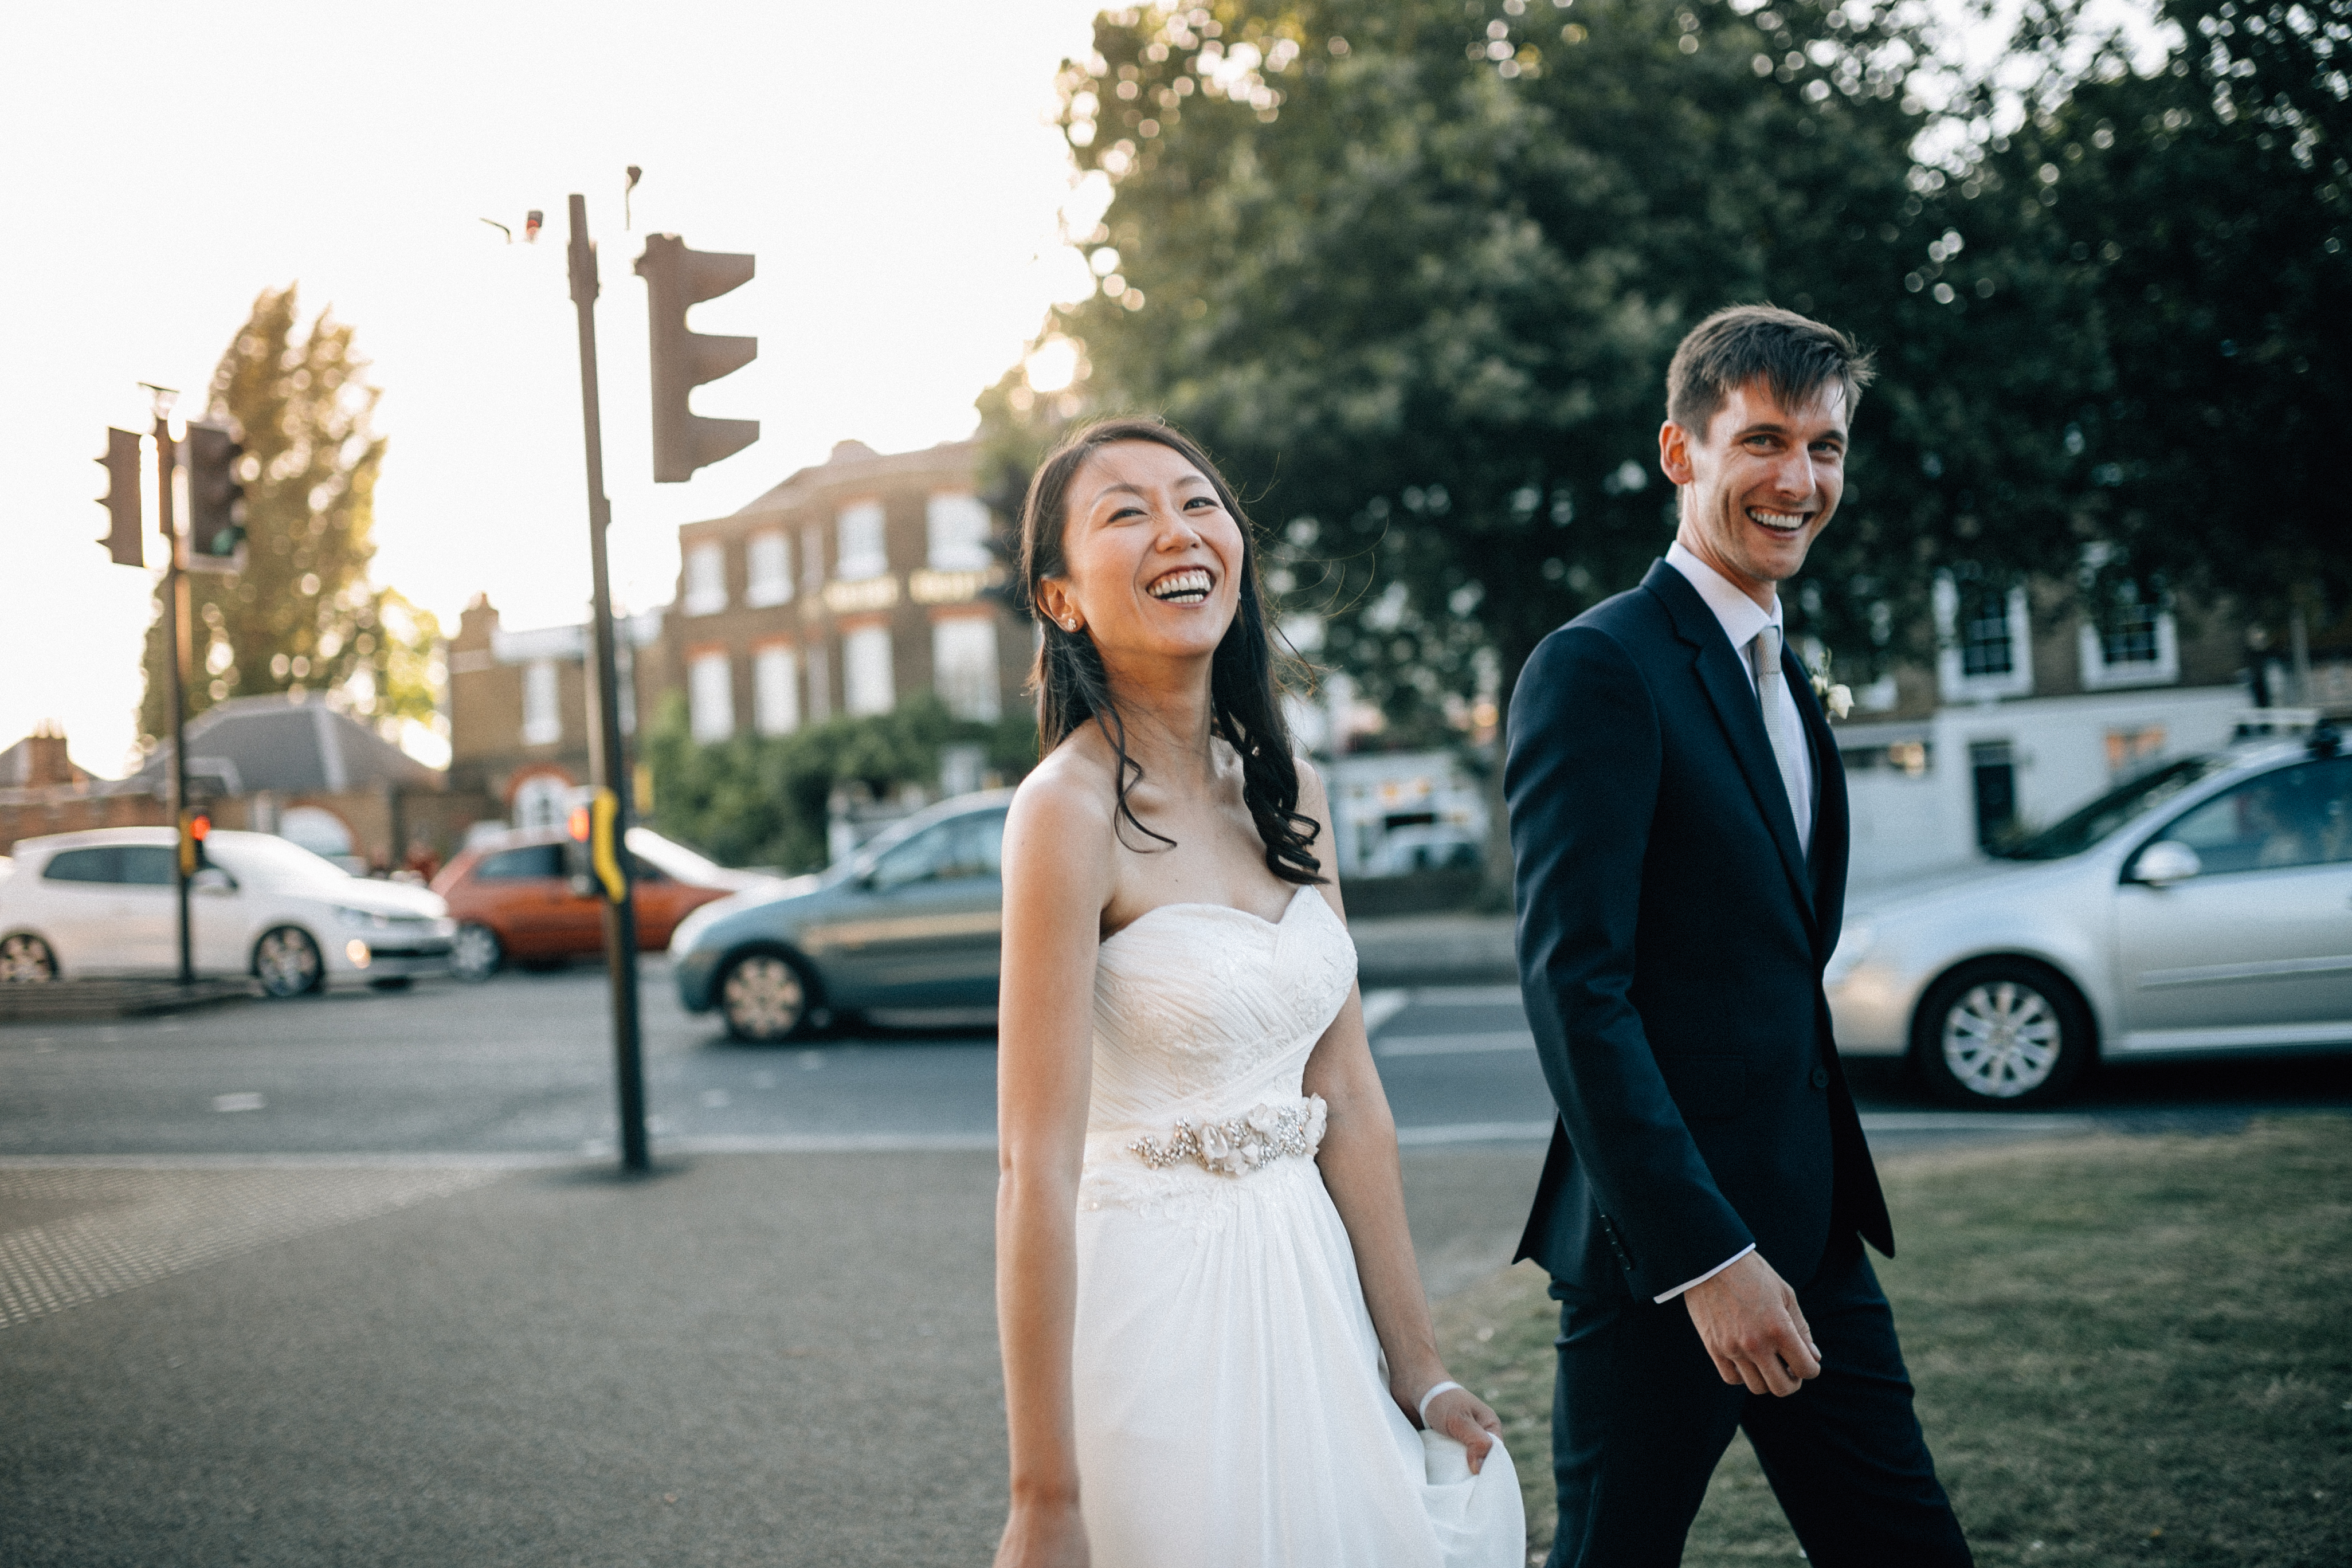 documentary wedding photography london and brighton speeches